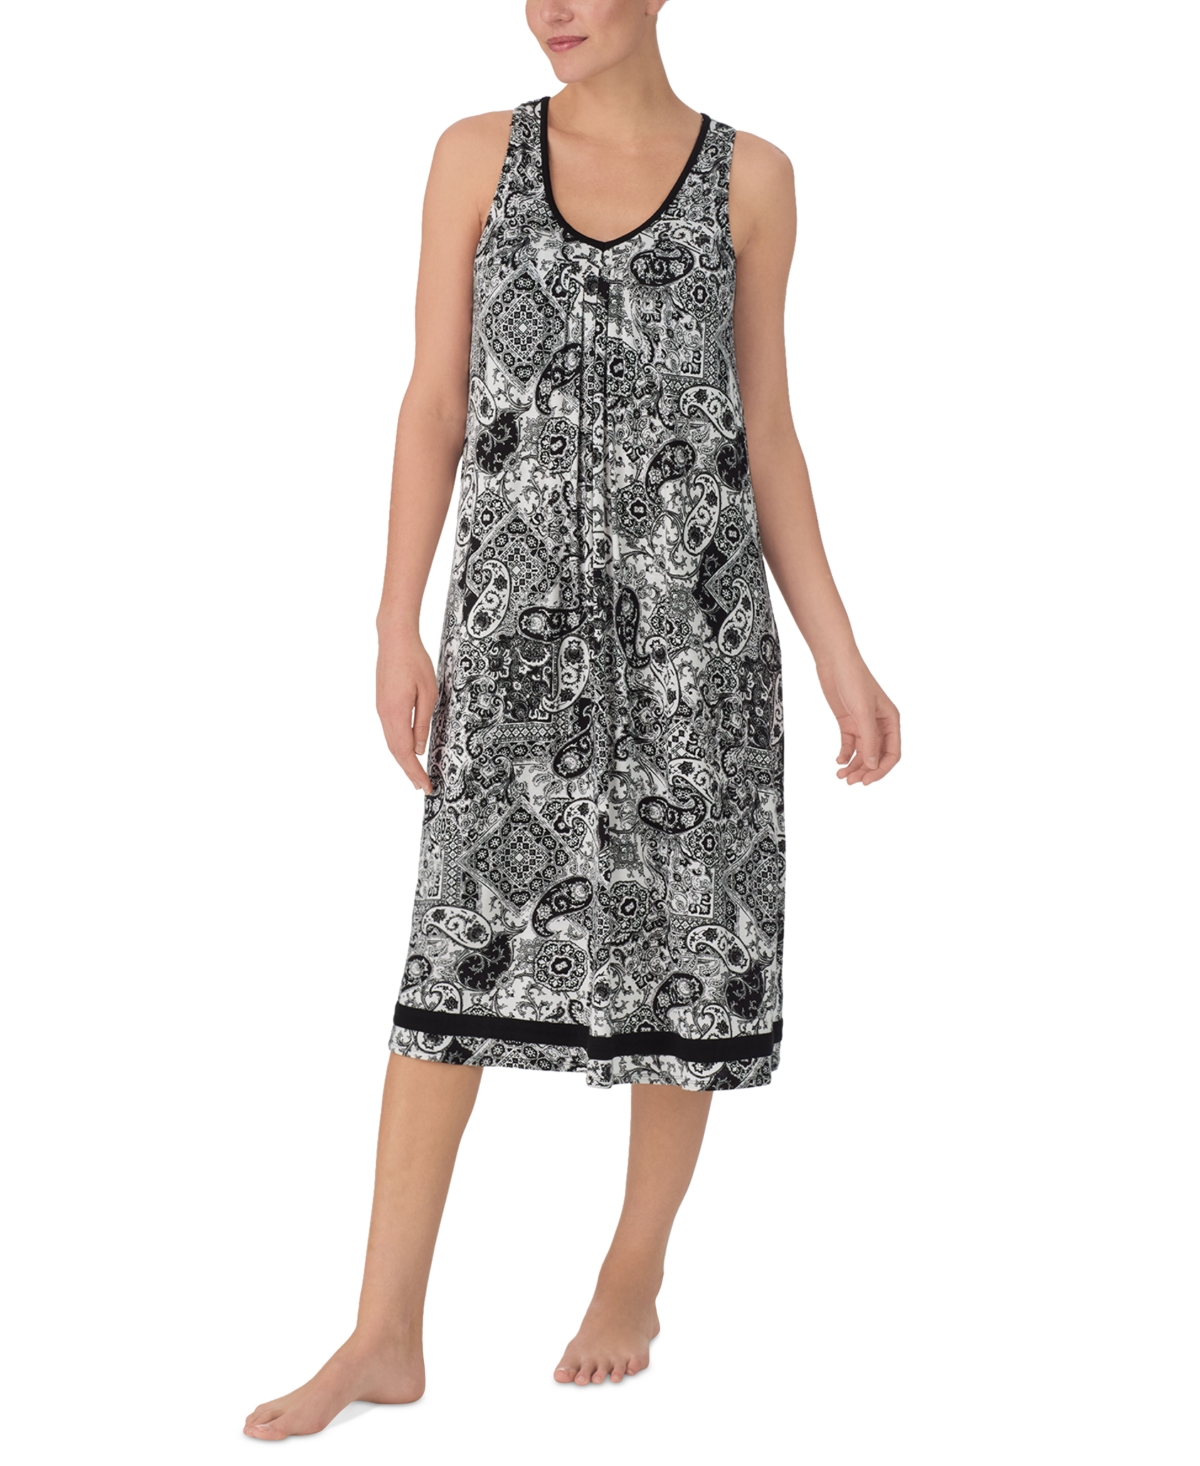 Women's Printed Sleeveless Nightgown - White Grid